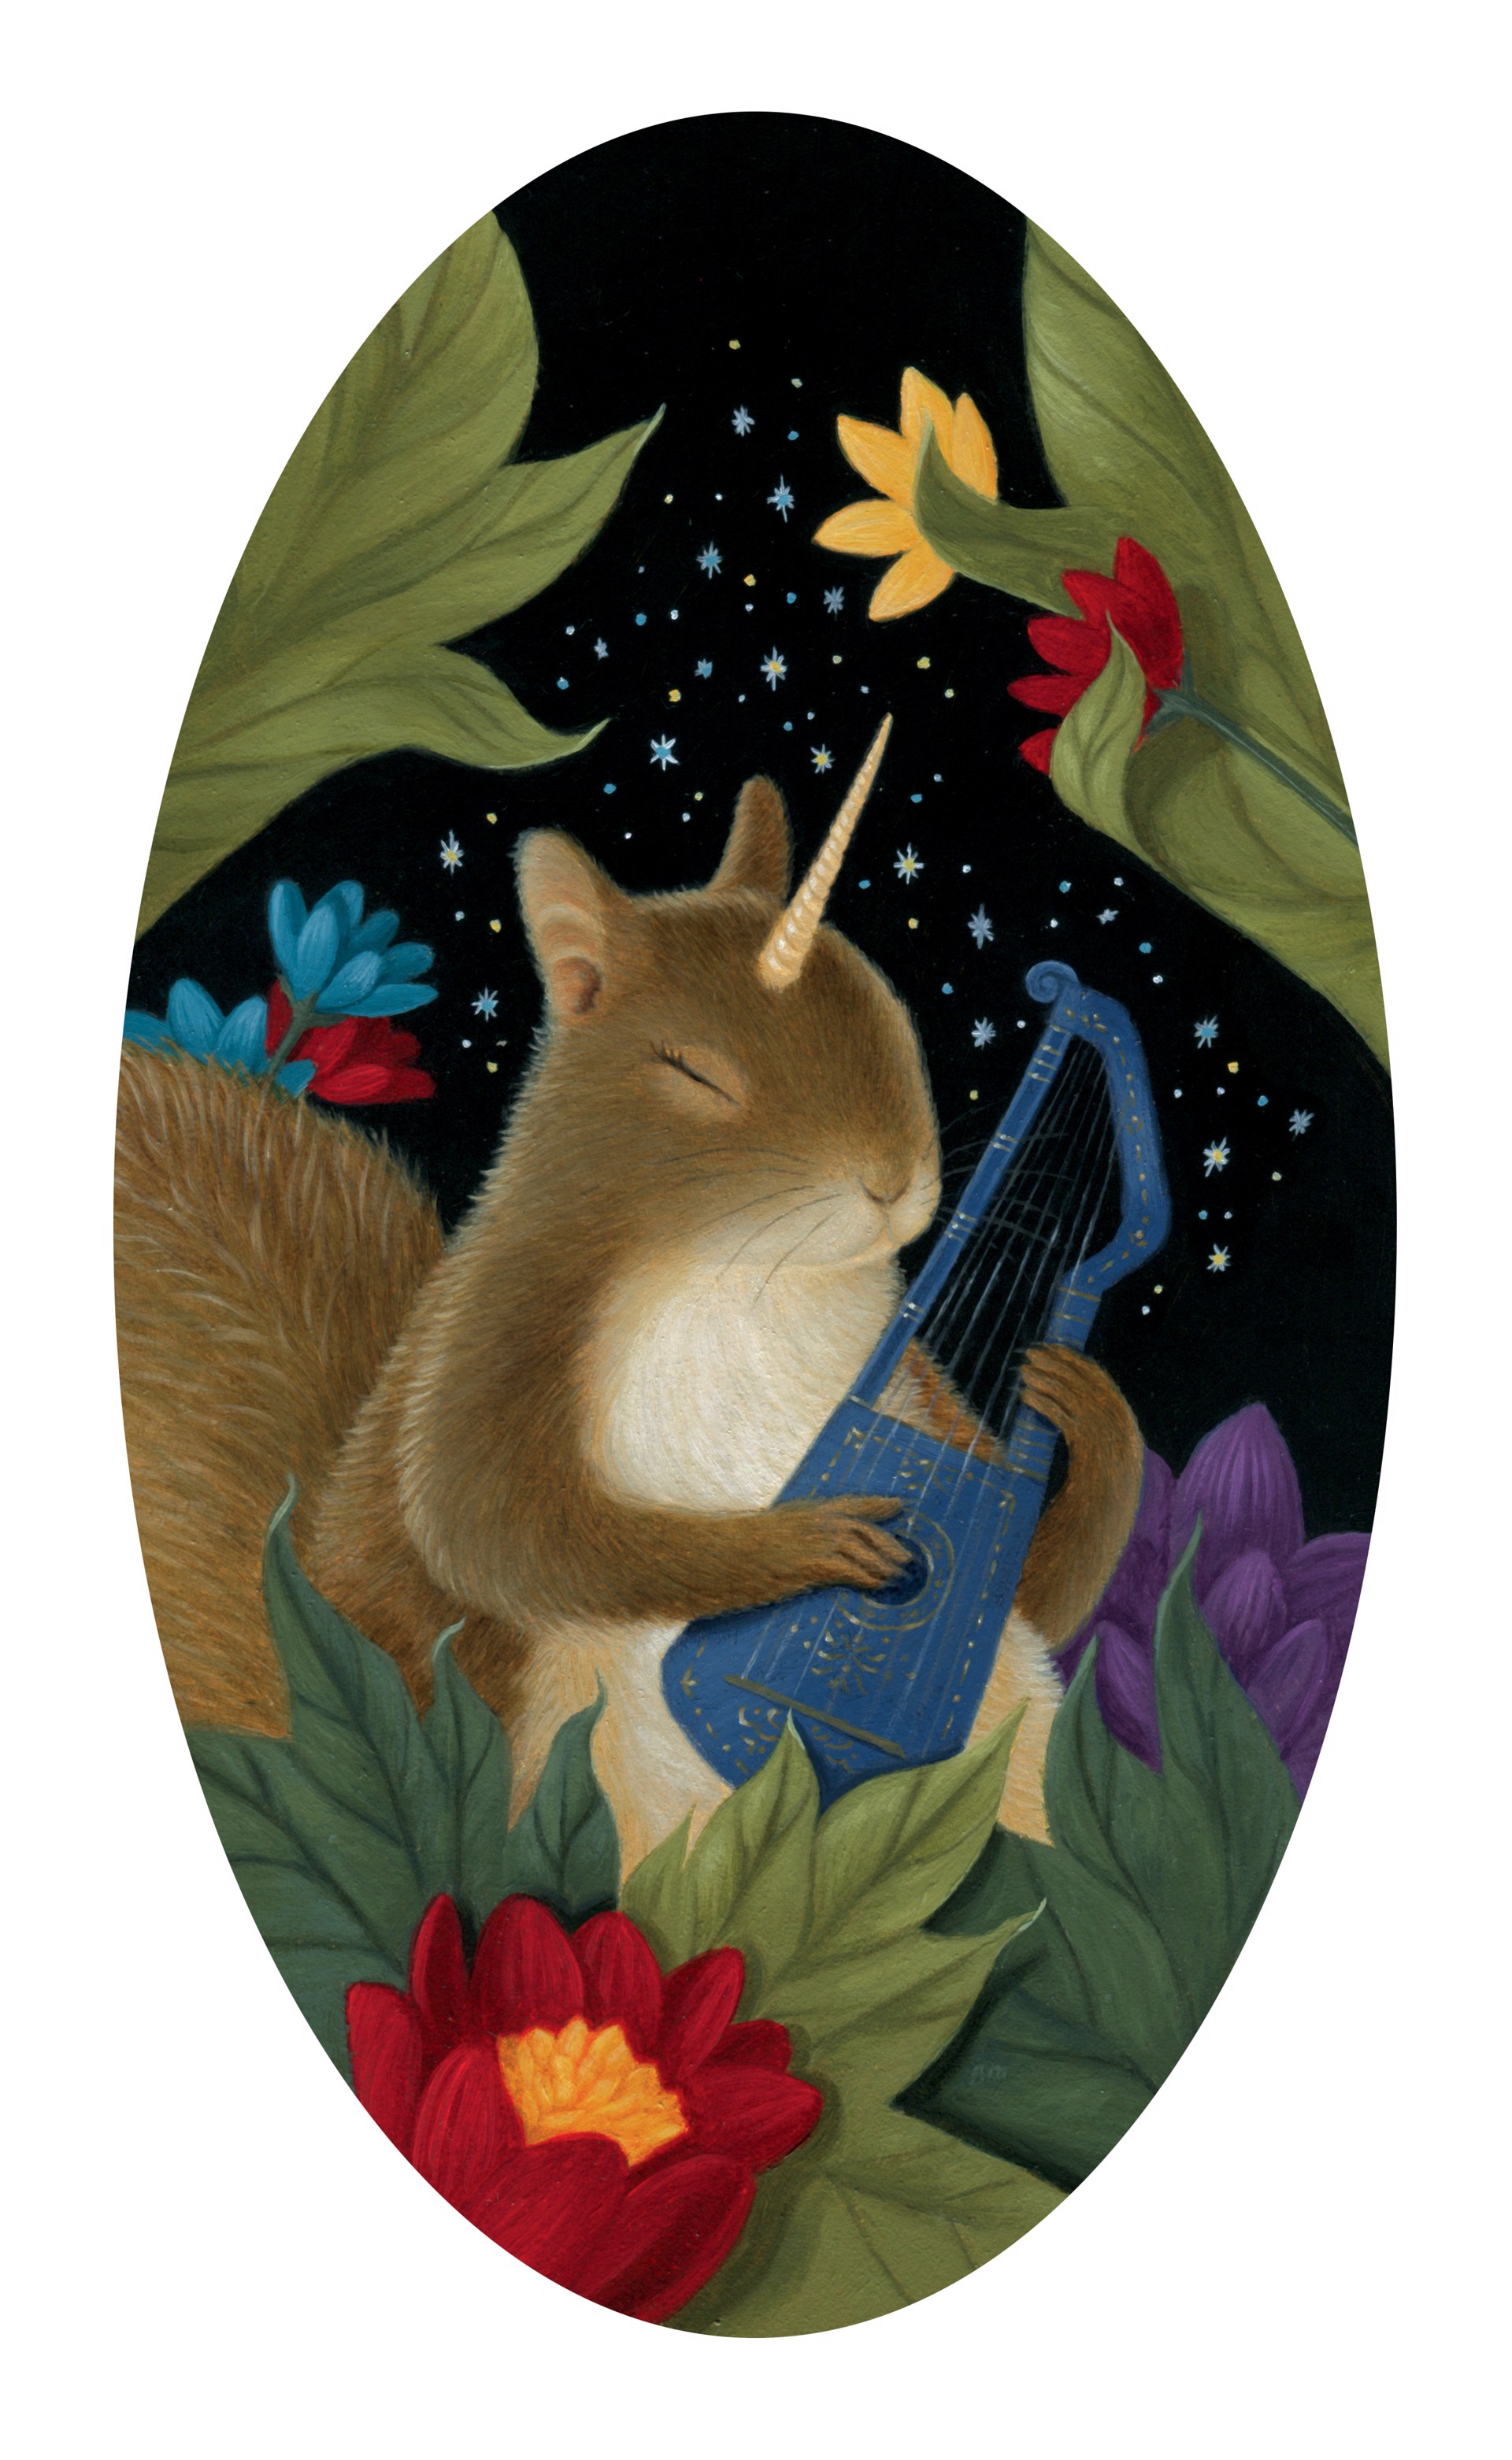 In the Meadow, Sweetly Playing (Unicornus Squirrelus) by Gina Matarazzo